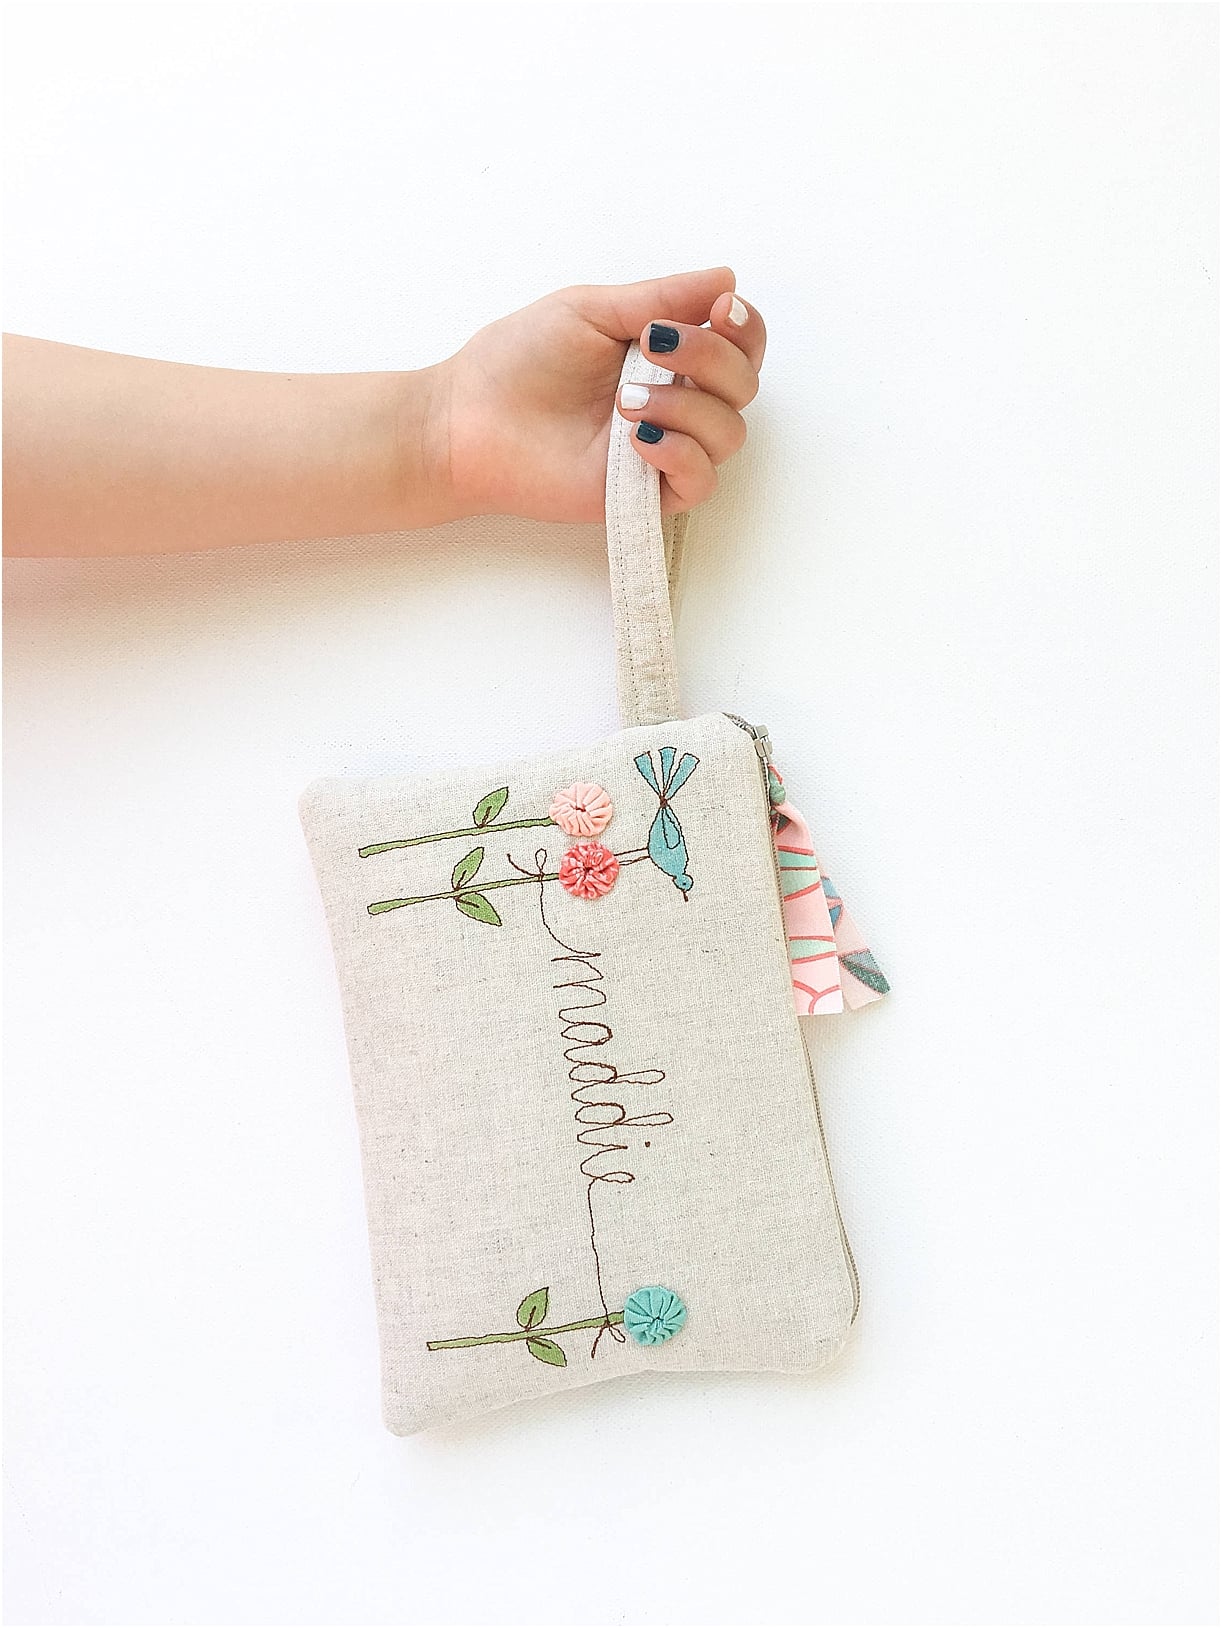 Flower Girl Gift Ideas as seen on Hill City Bride Virginia Wedding Blog - purse, bag, personalized